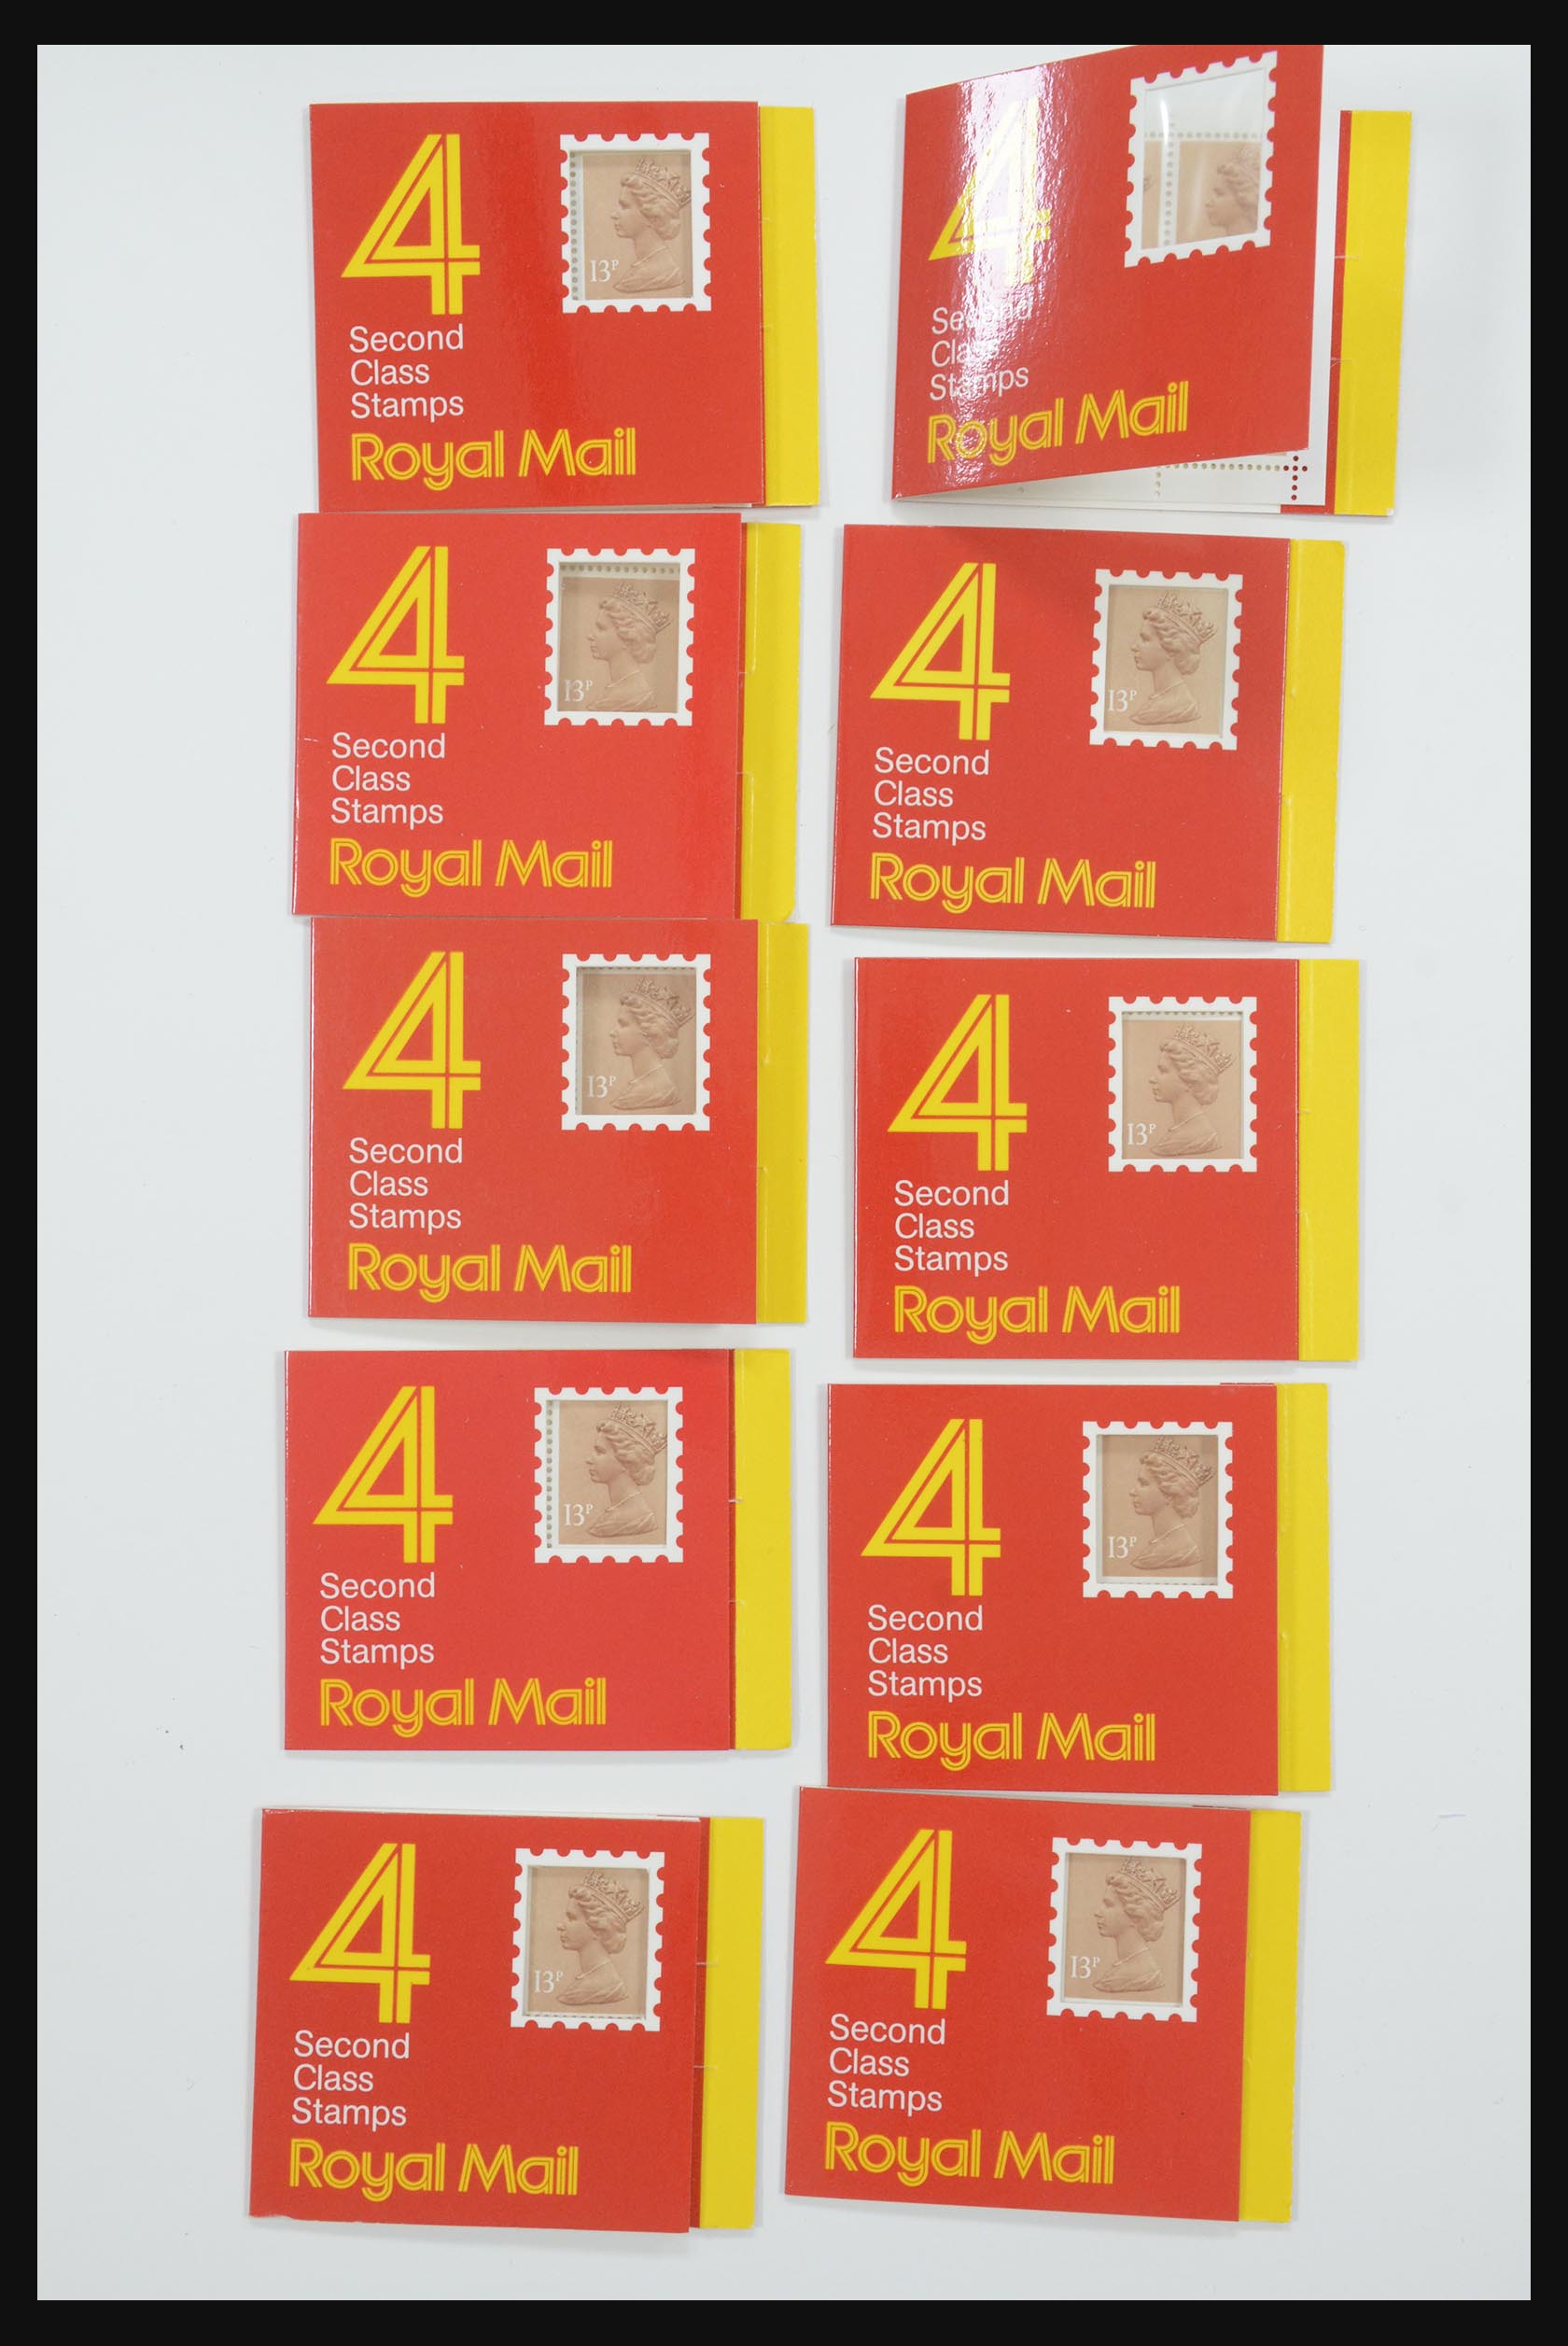 31961 060 - 31961 Great Britain stampbooklets 1971-1999.